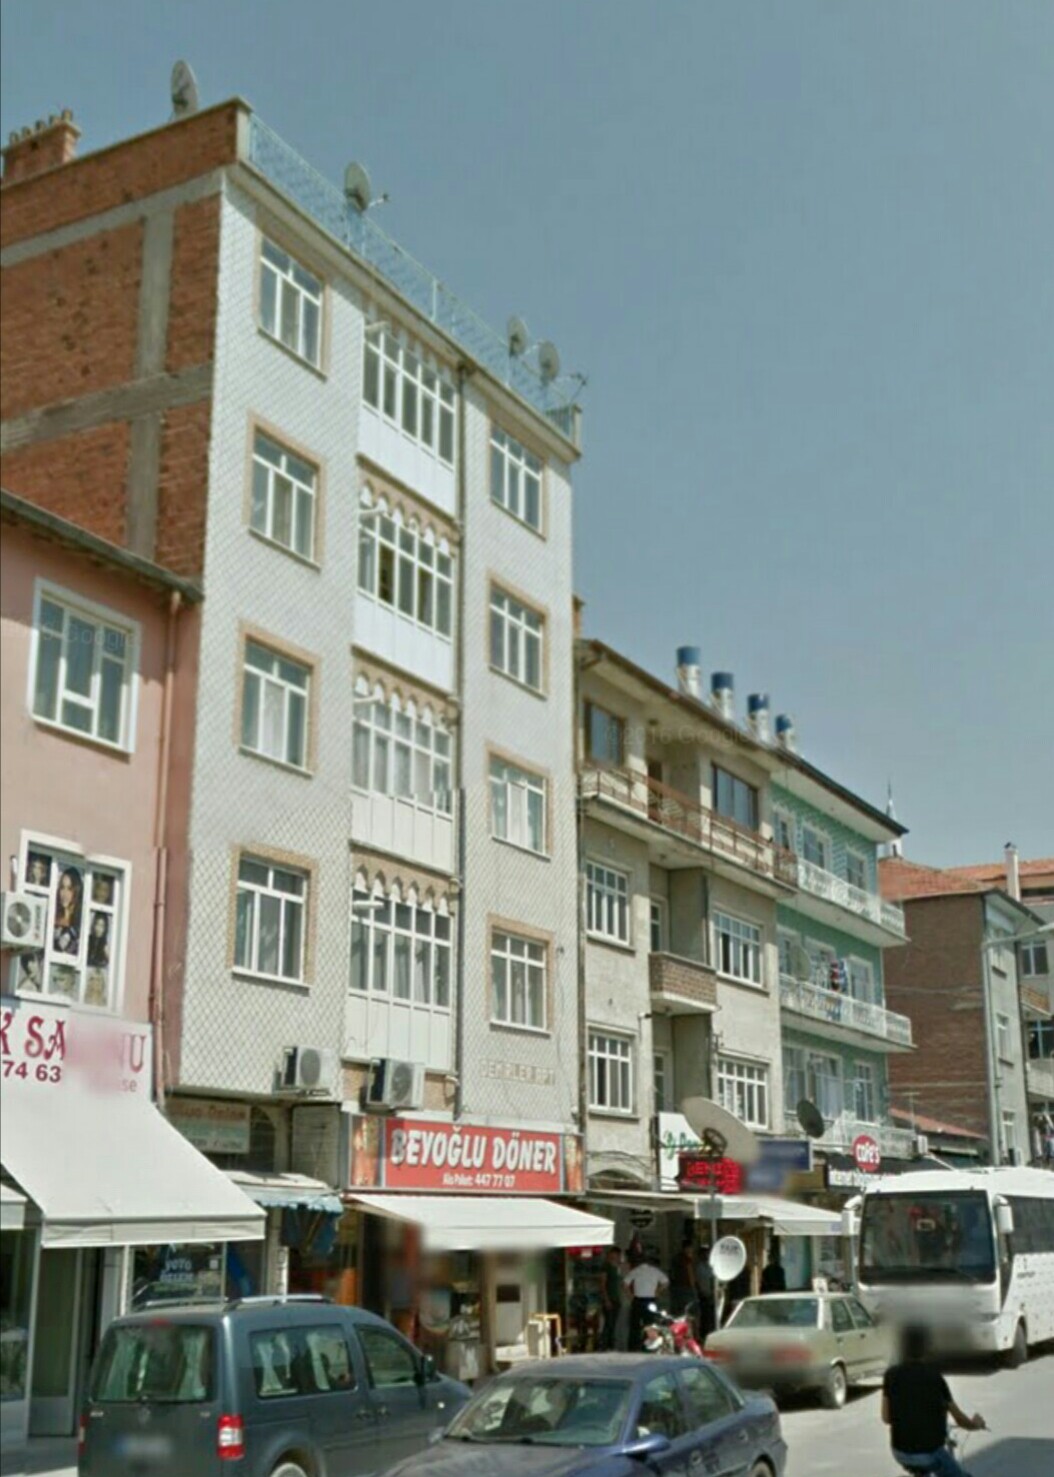 Asarlkl Ali Demir Apartman.